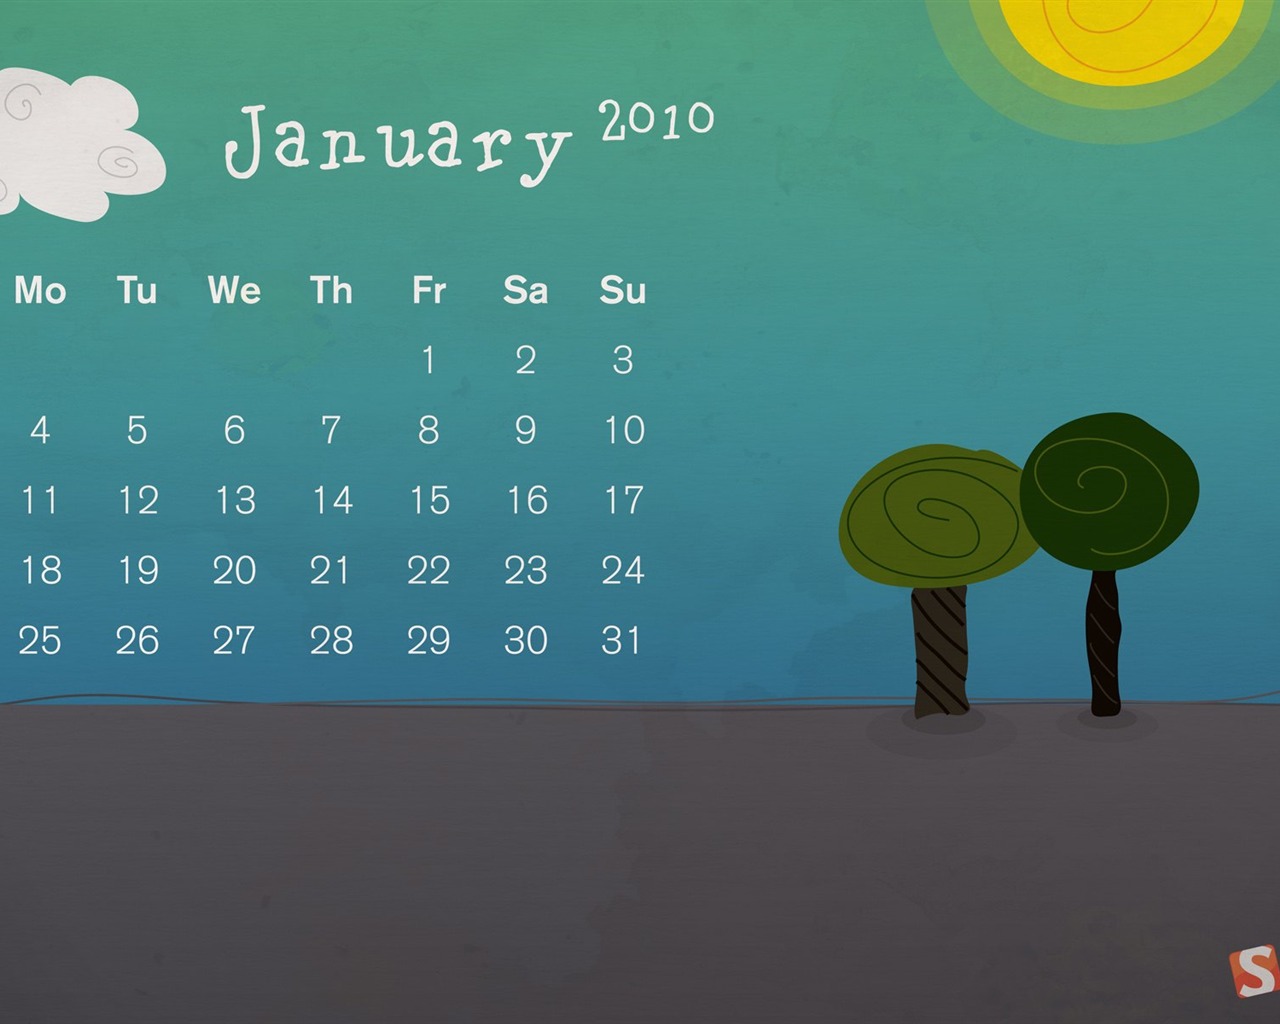 Enero 2010 Calendario de Escritorio #11 - 1280x1024